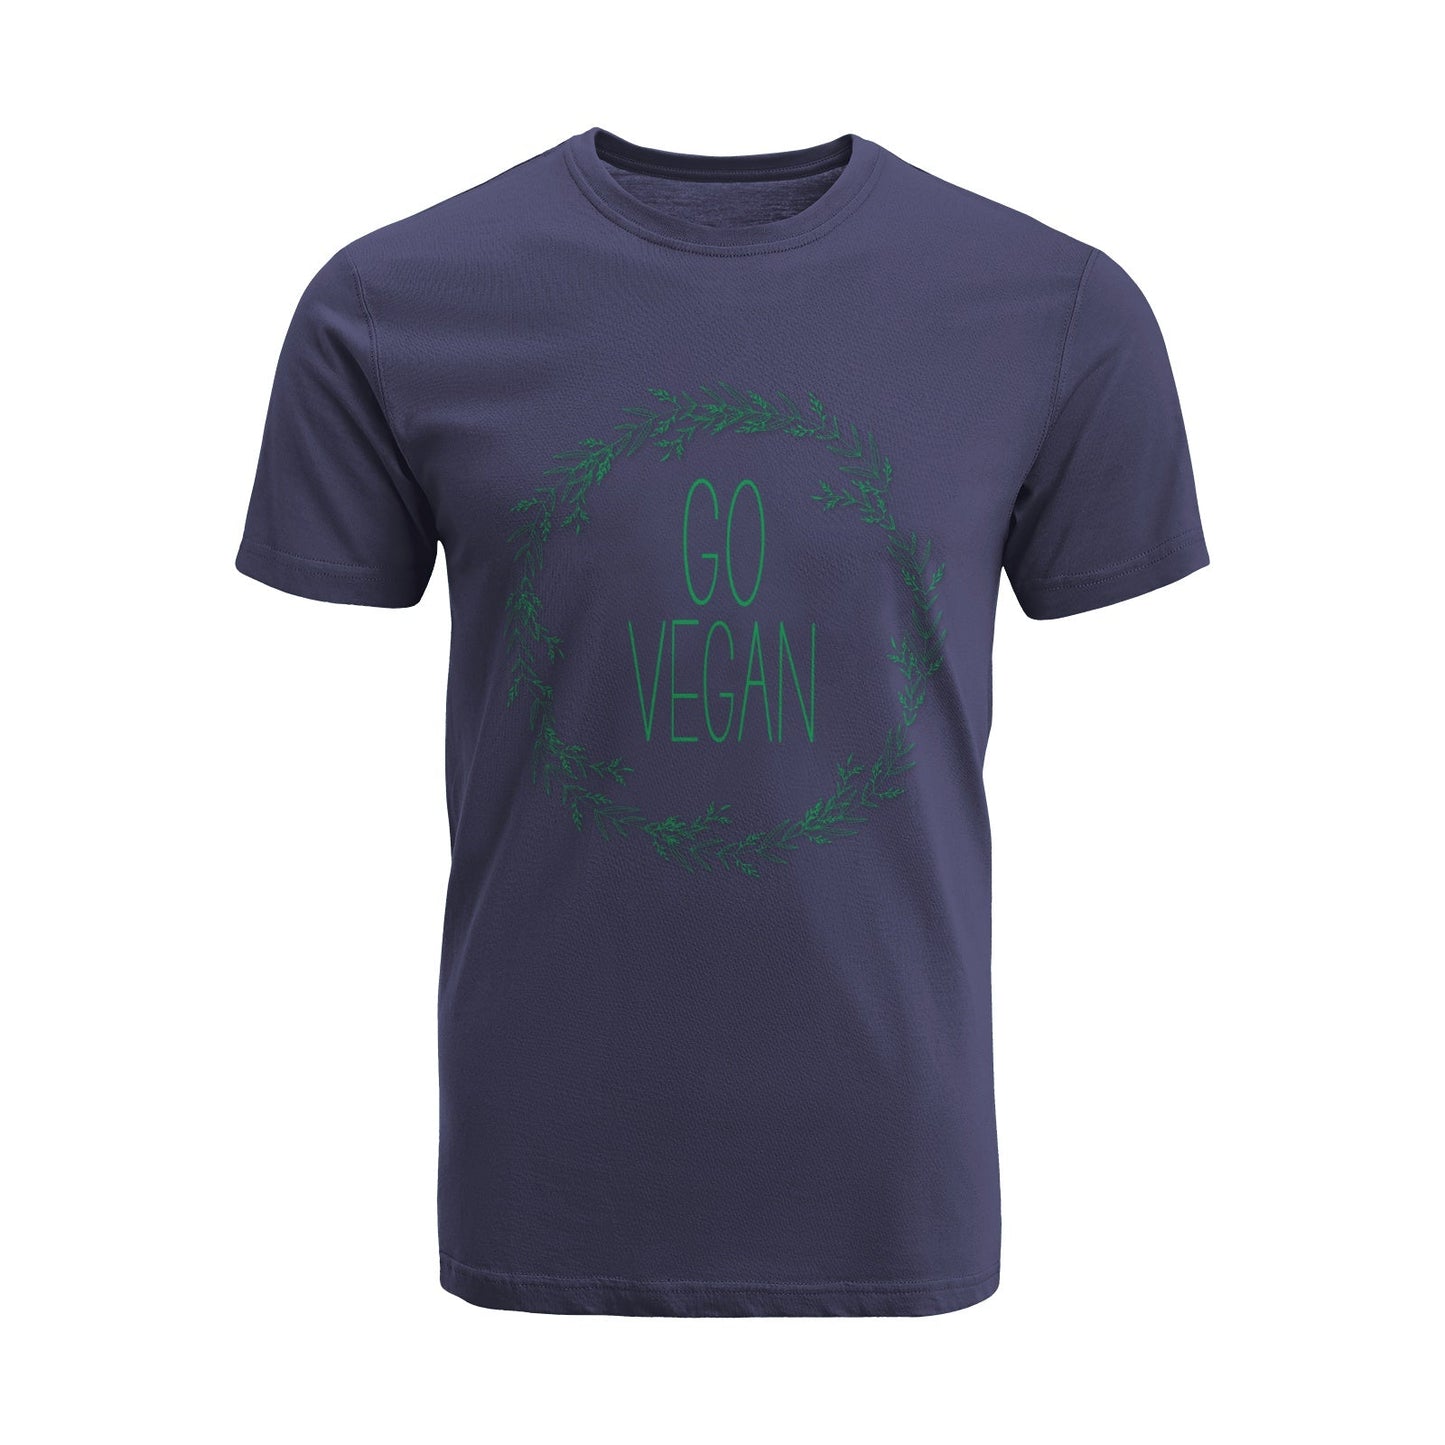 Unisex Short Sleeve Crew Neck Cotton Jersey T-Shirt VEGAN 16